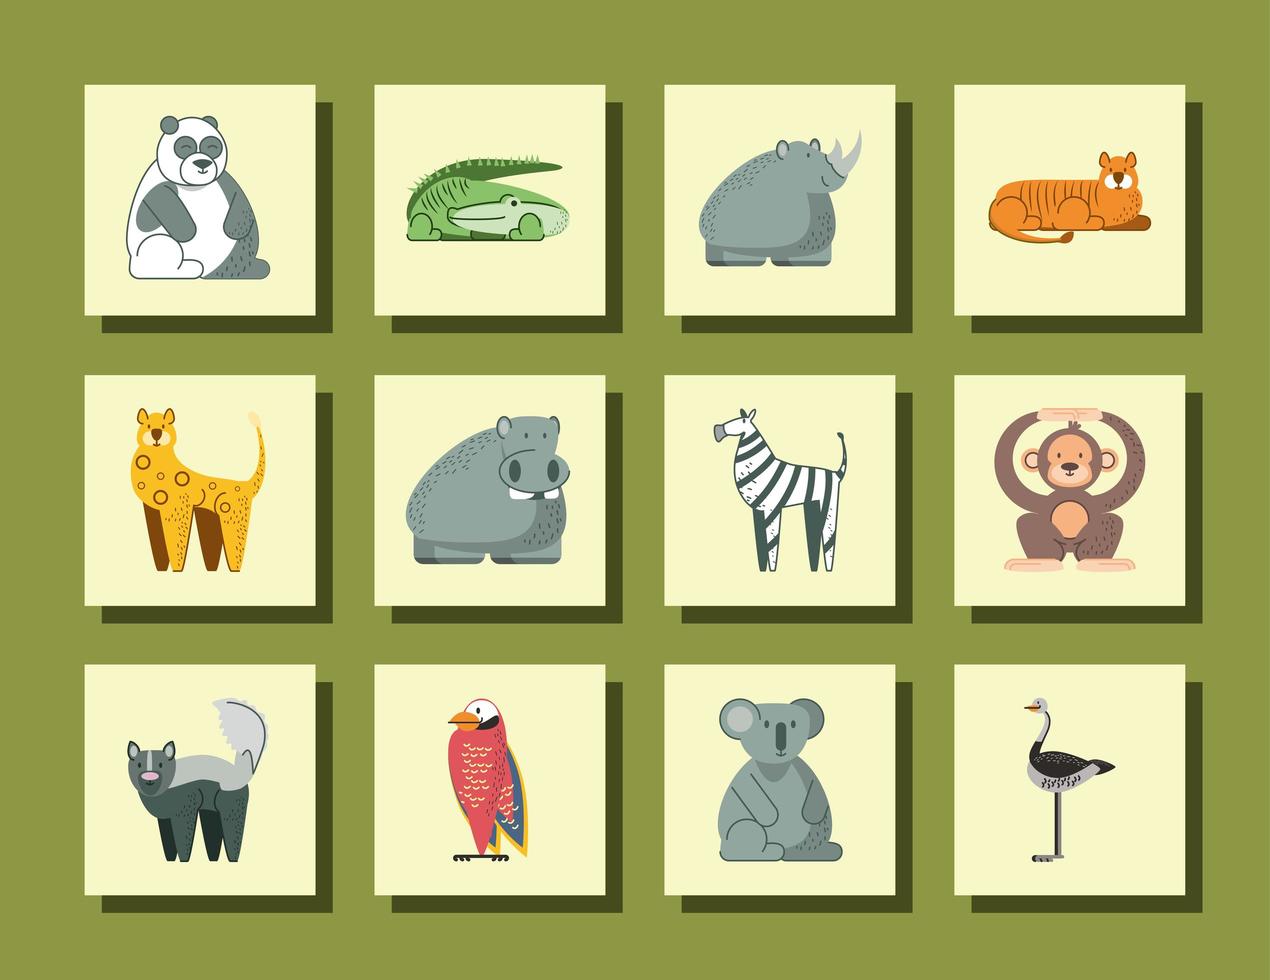 panda cocodrilo rinoceronte hipopótamo mono koala y pájaro animales de la selva iconos de dibujos animados vector